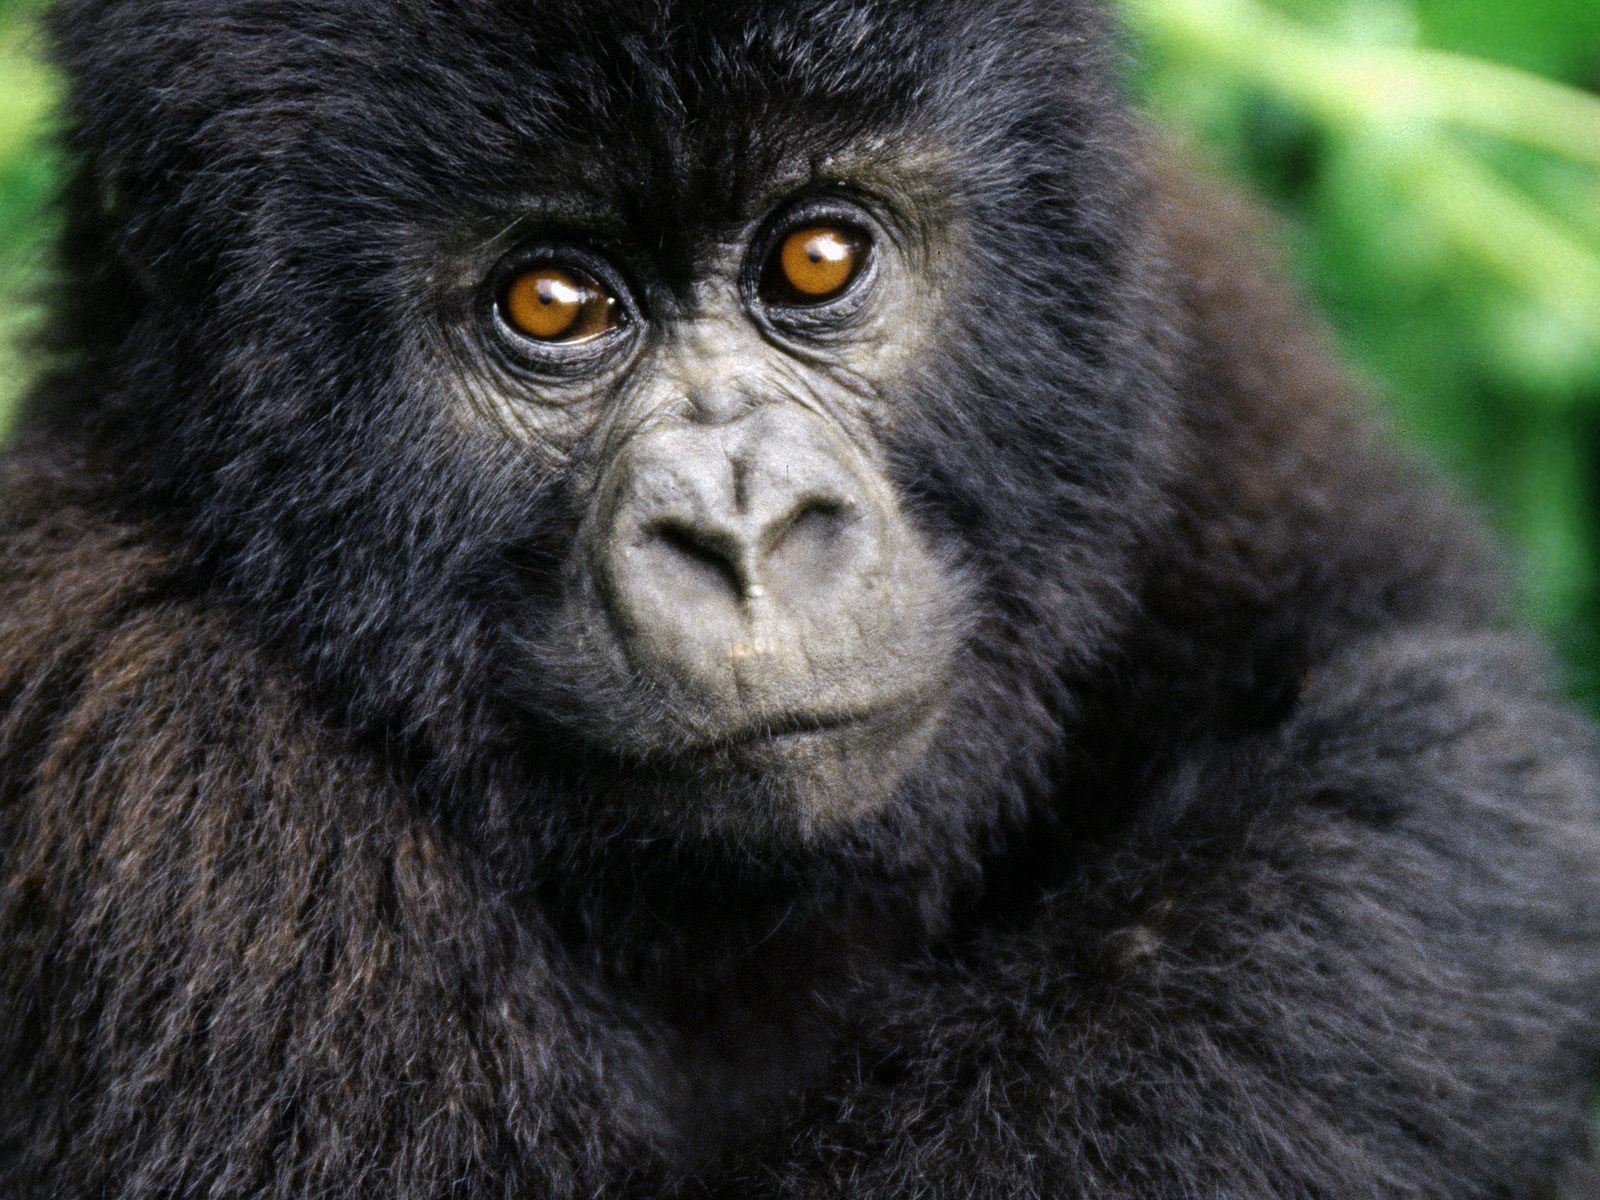 87603 Hintergrundbild herunterladen tiere, junge, gorilla, kind, tot, joey, behaart, behaarte - Bildschirmschoner und Bilder kostenlos